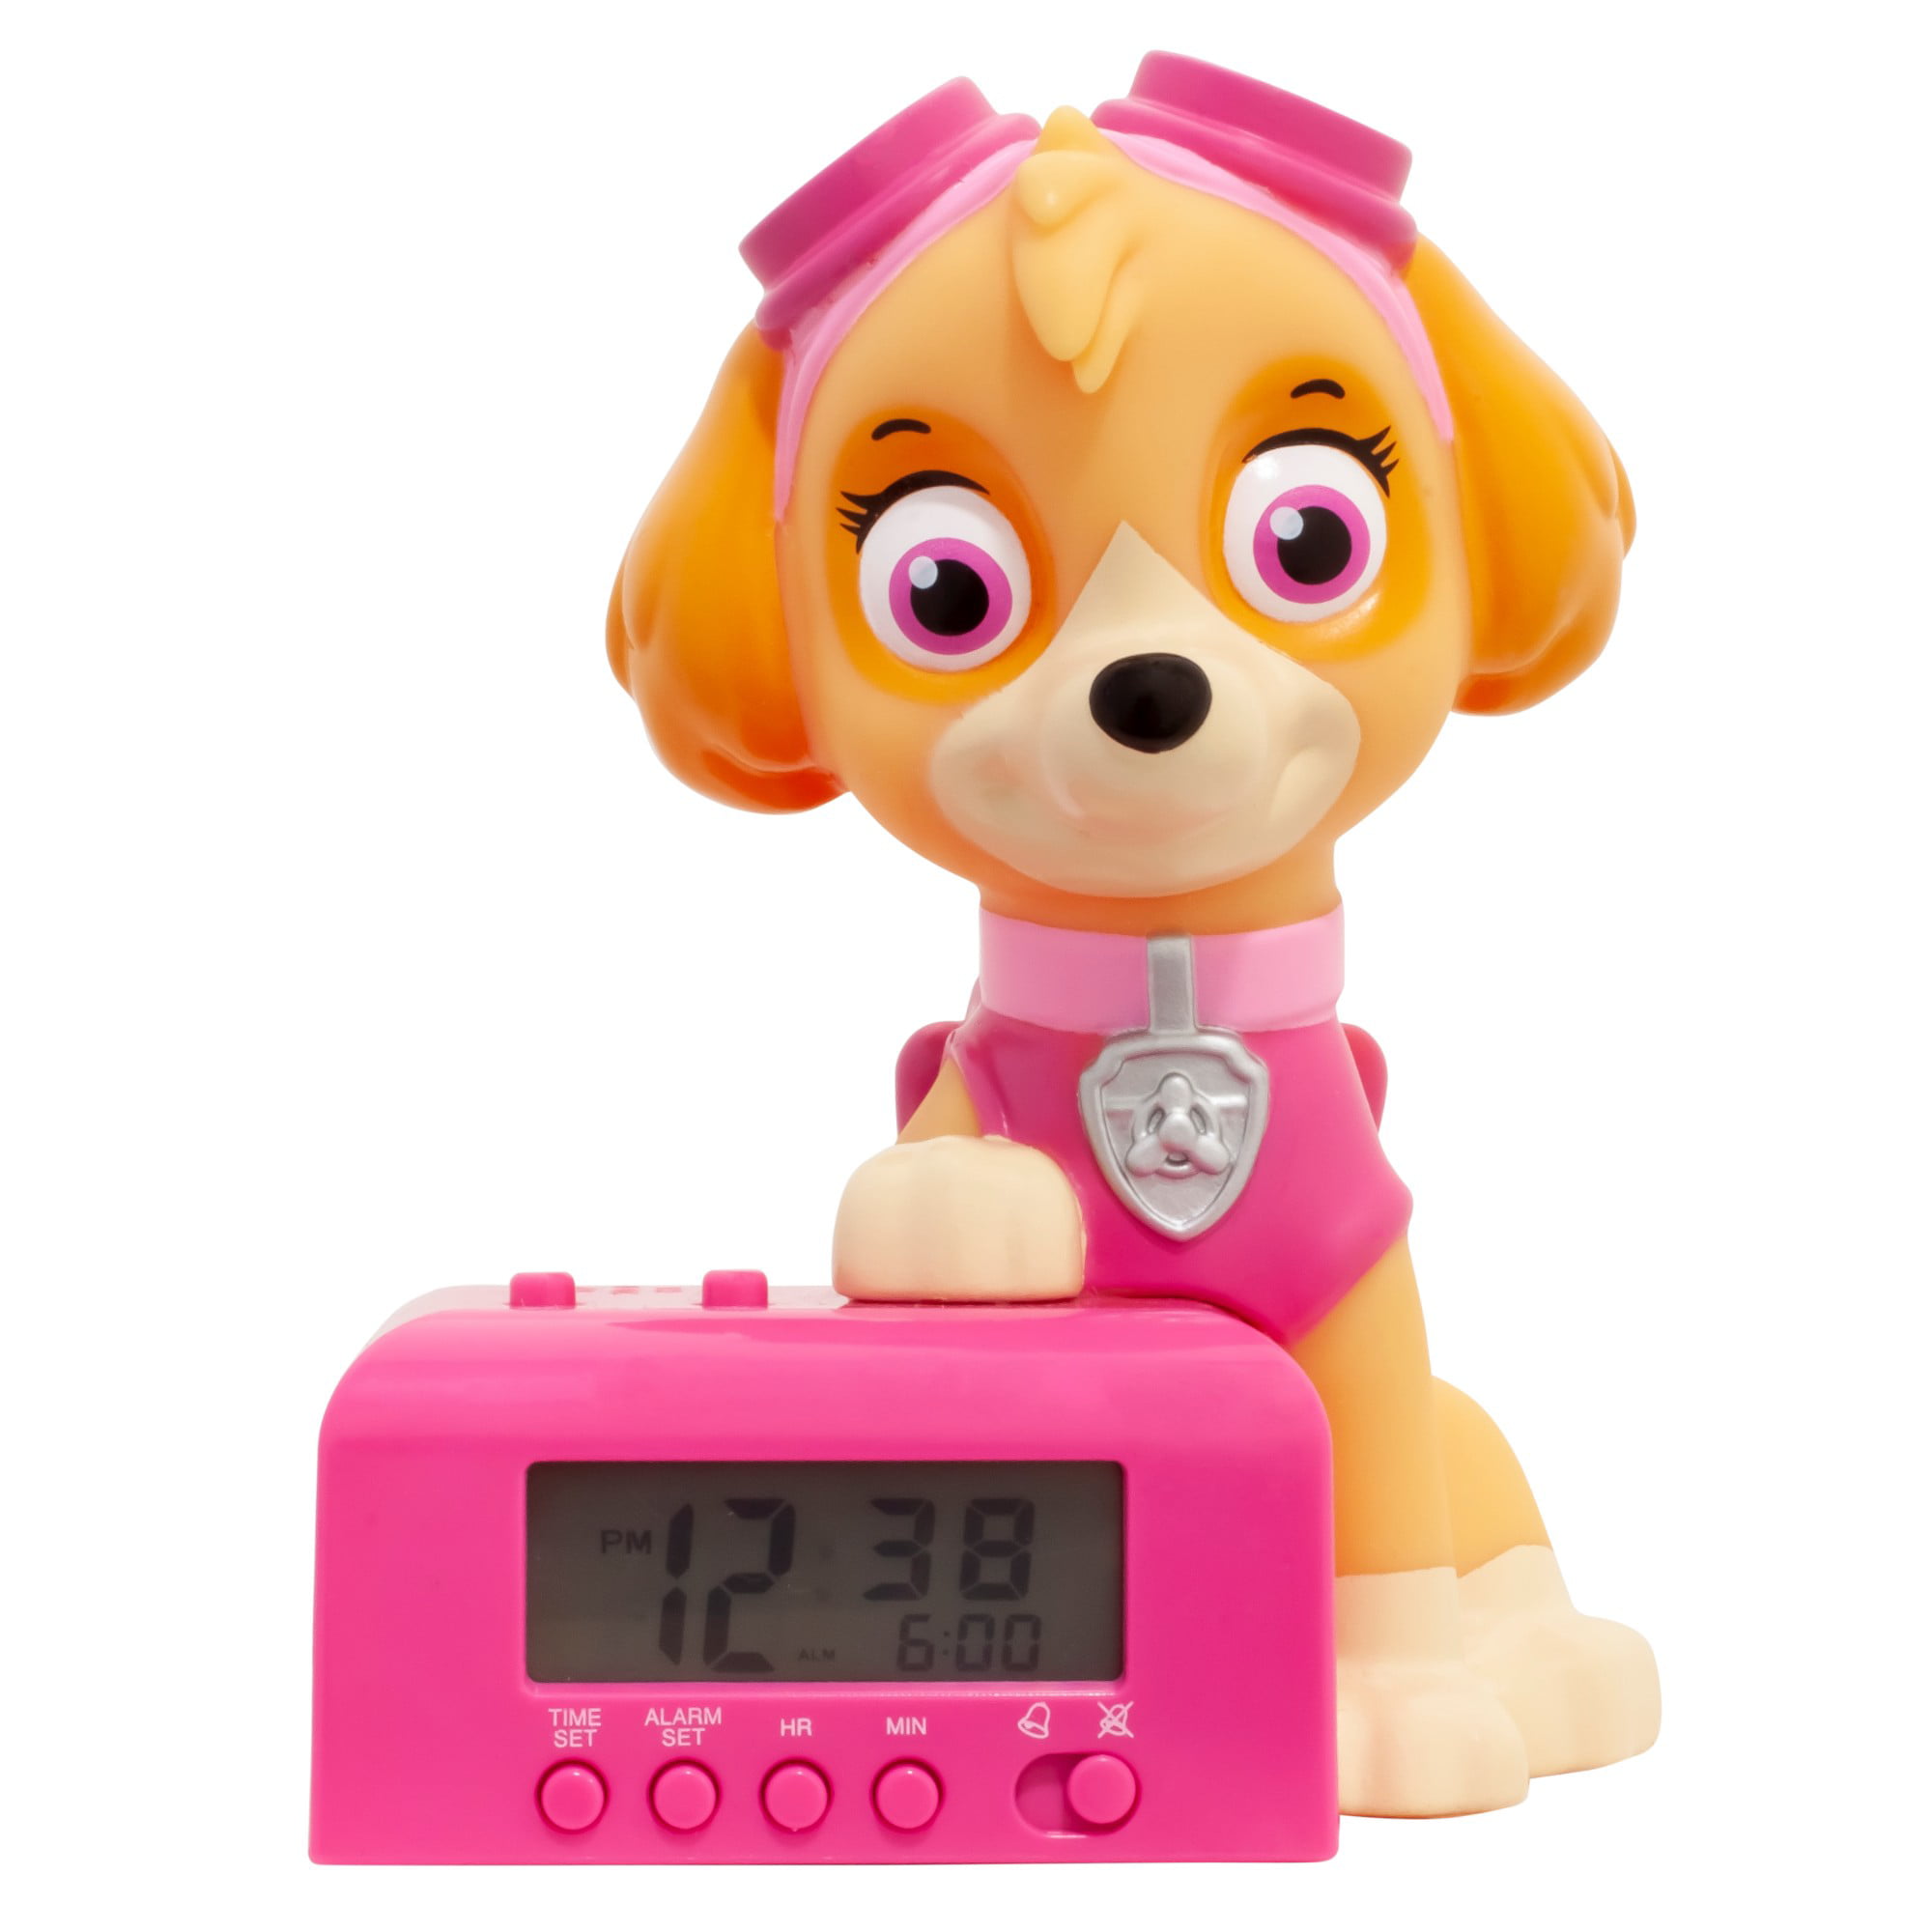 Bulb Botz Paw Patrol 2021302 Chase Kids Night Light Alarm Clock with Characte... 